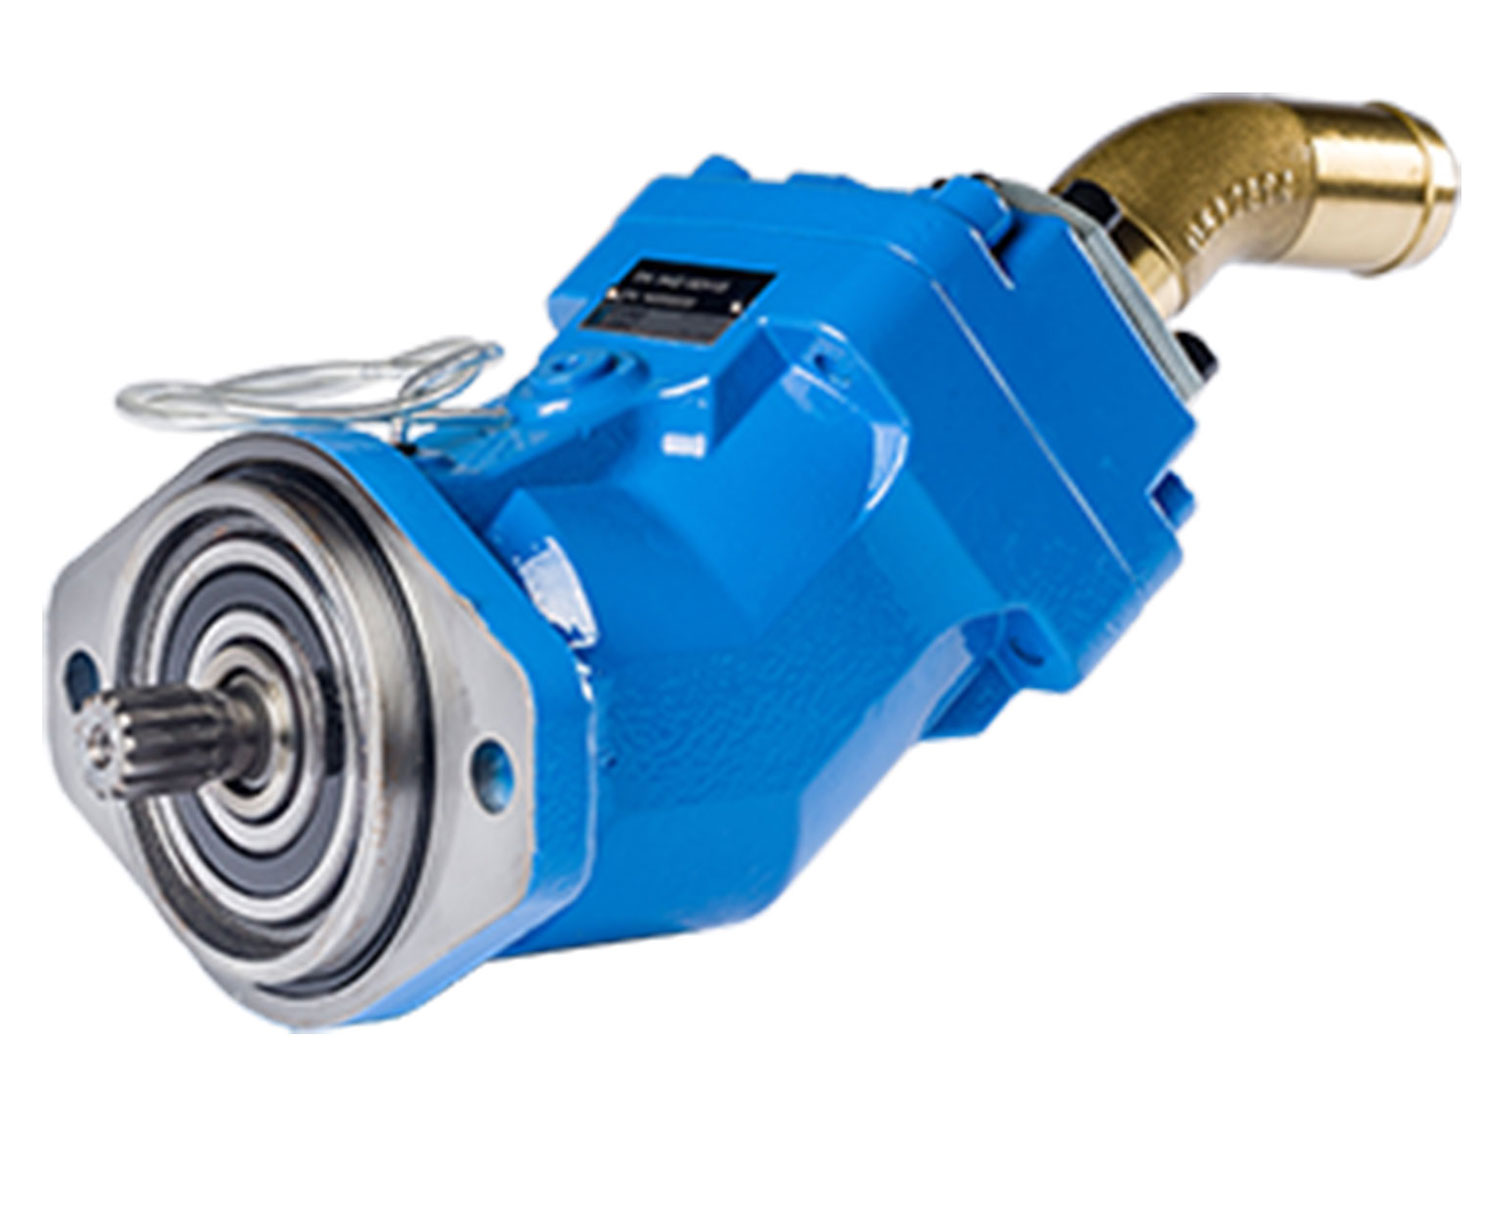 LKW-Hydraulik Konstantpumpe XAi Hydro-Leduc, blau